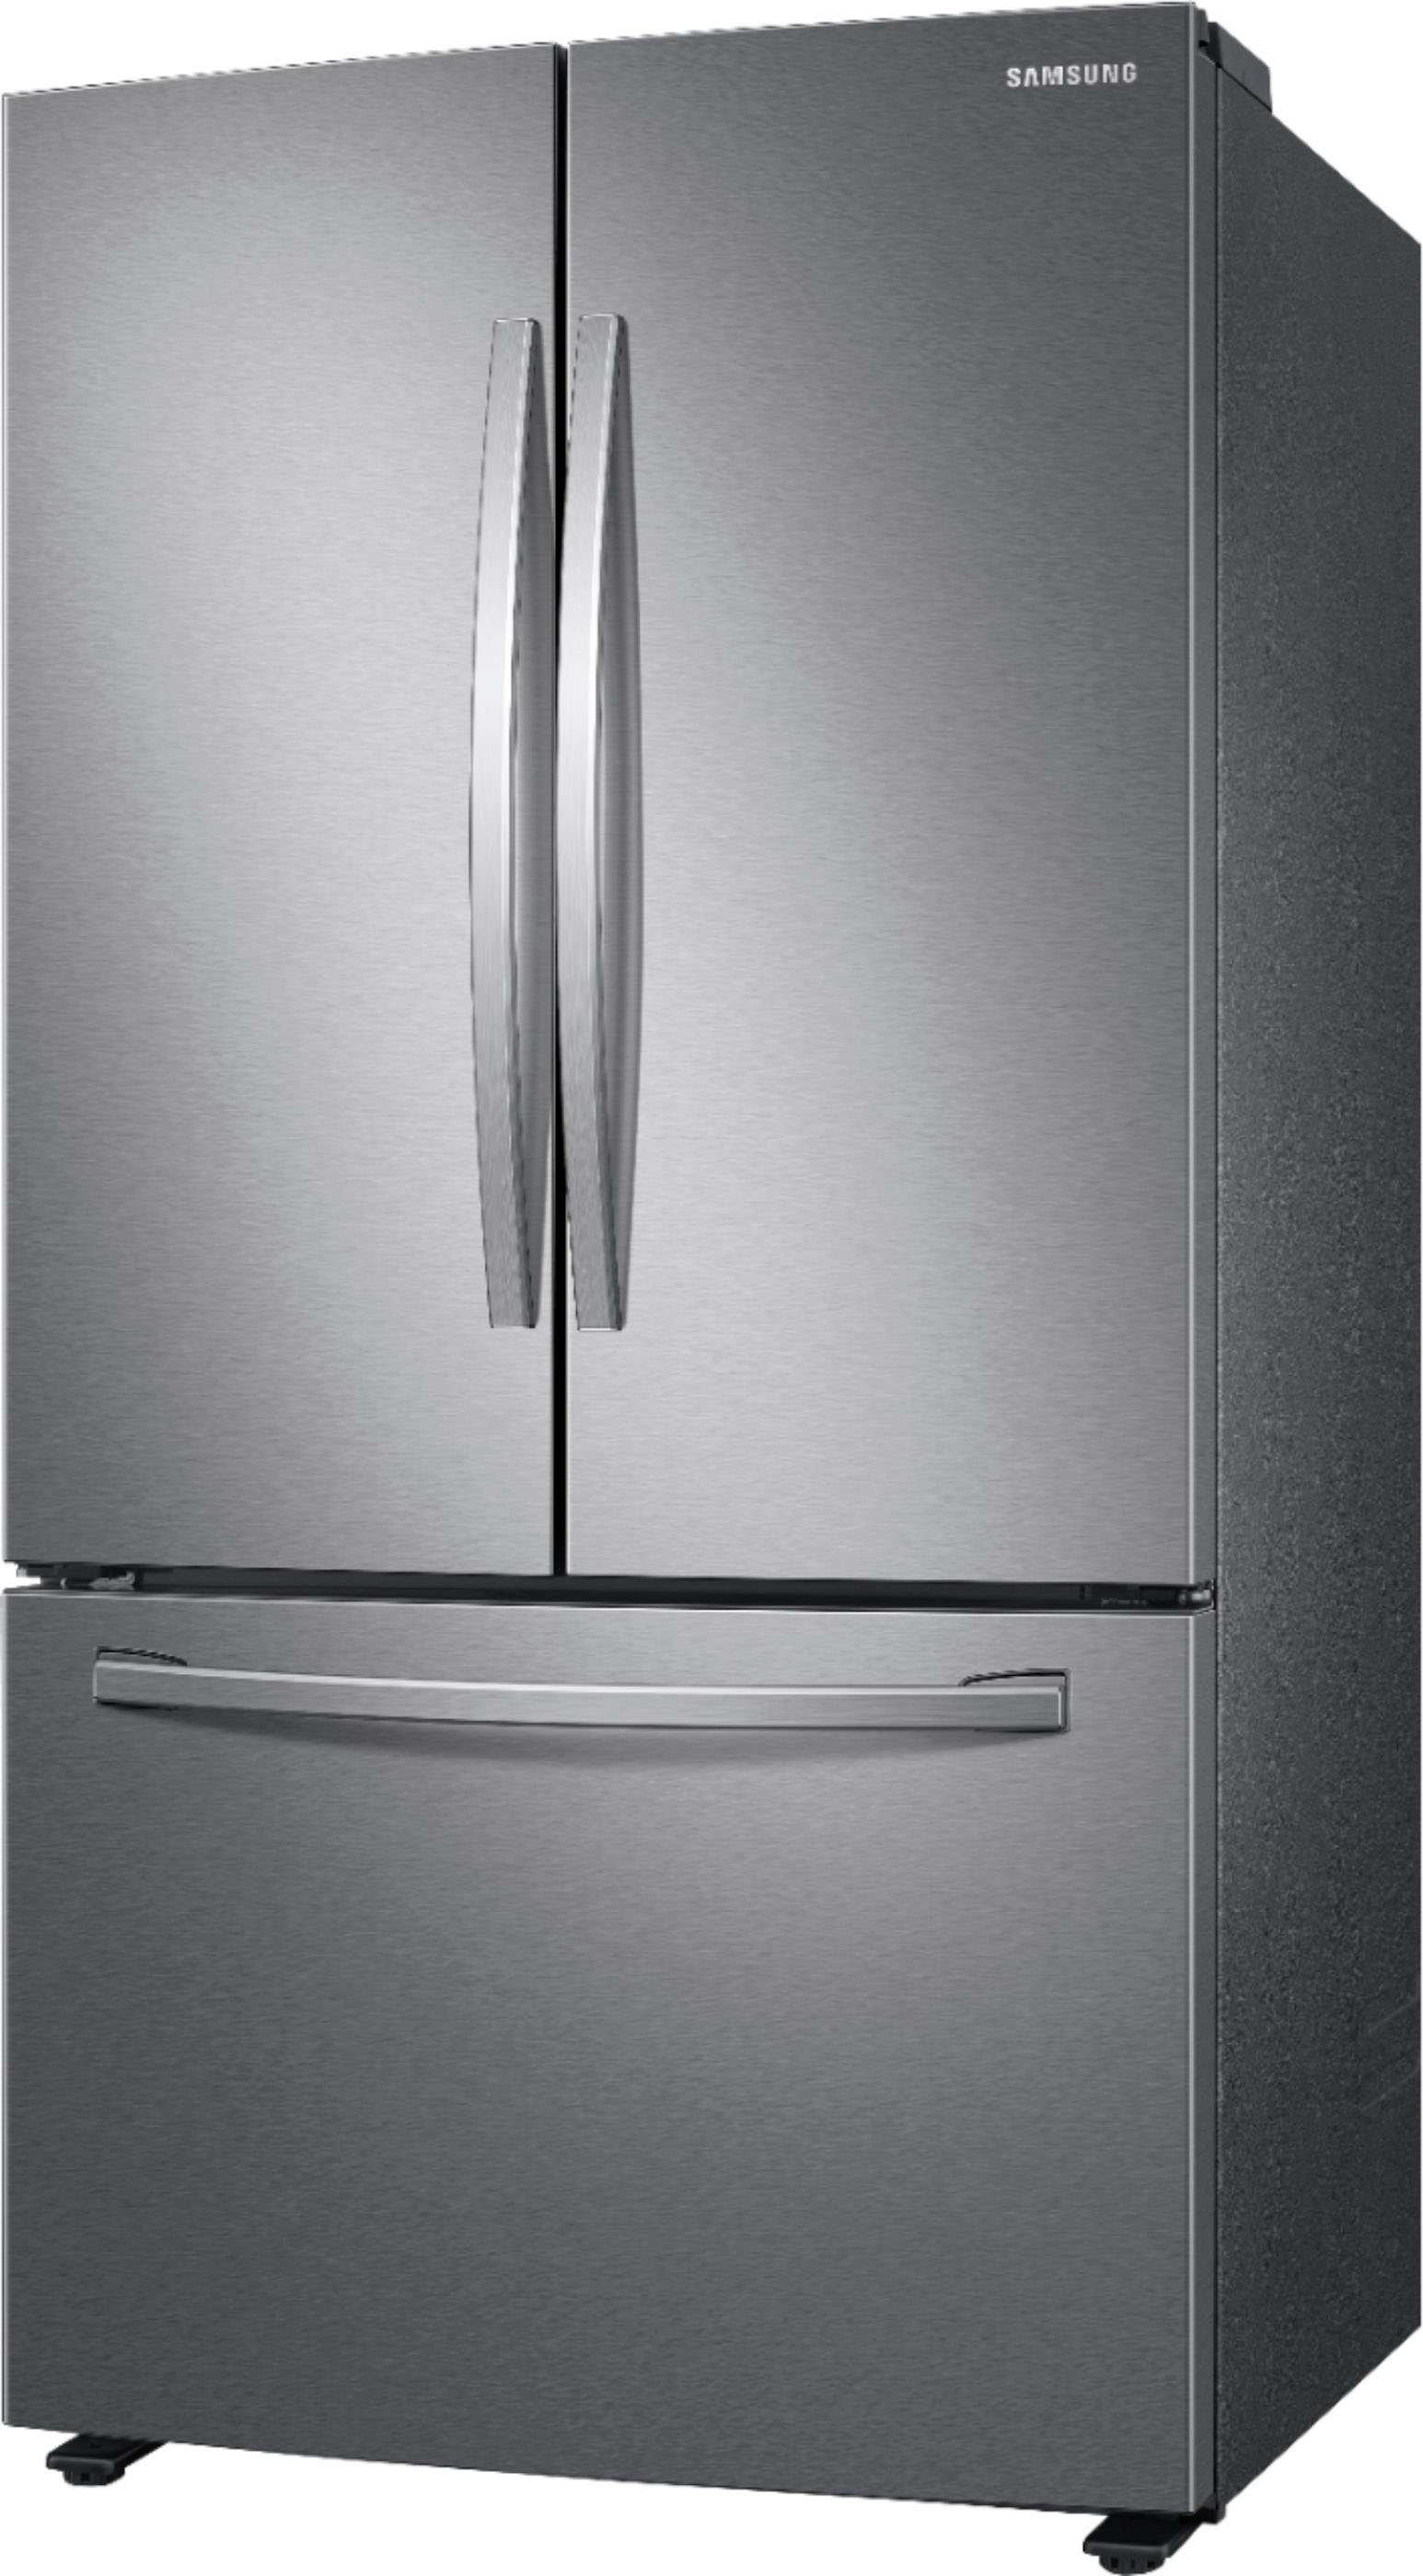 Left View: Samsung - Geek Squad Certified Refurbished 28 cu. ft. Large Capacity 3-Door French Door Refrigerator - Stainless steel